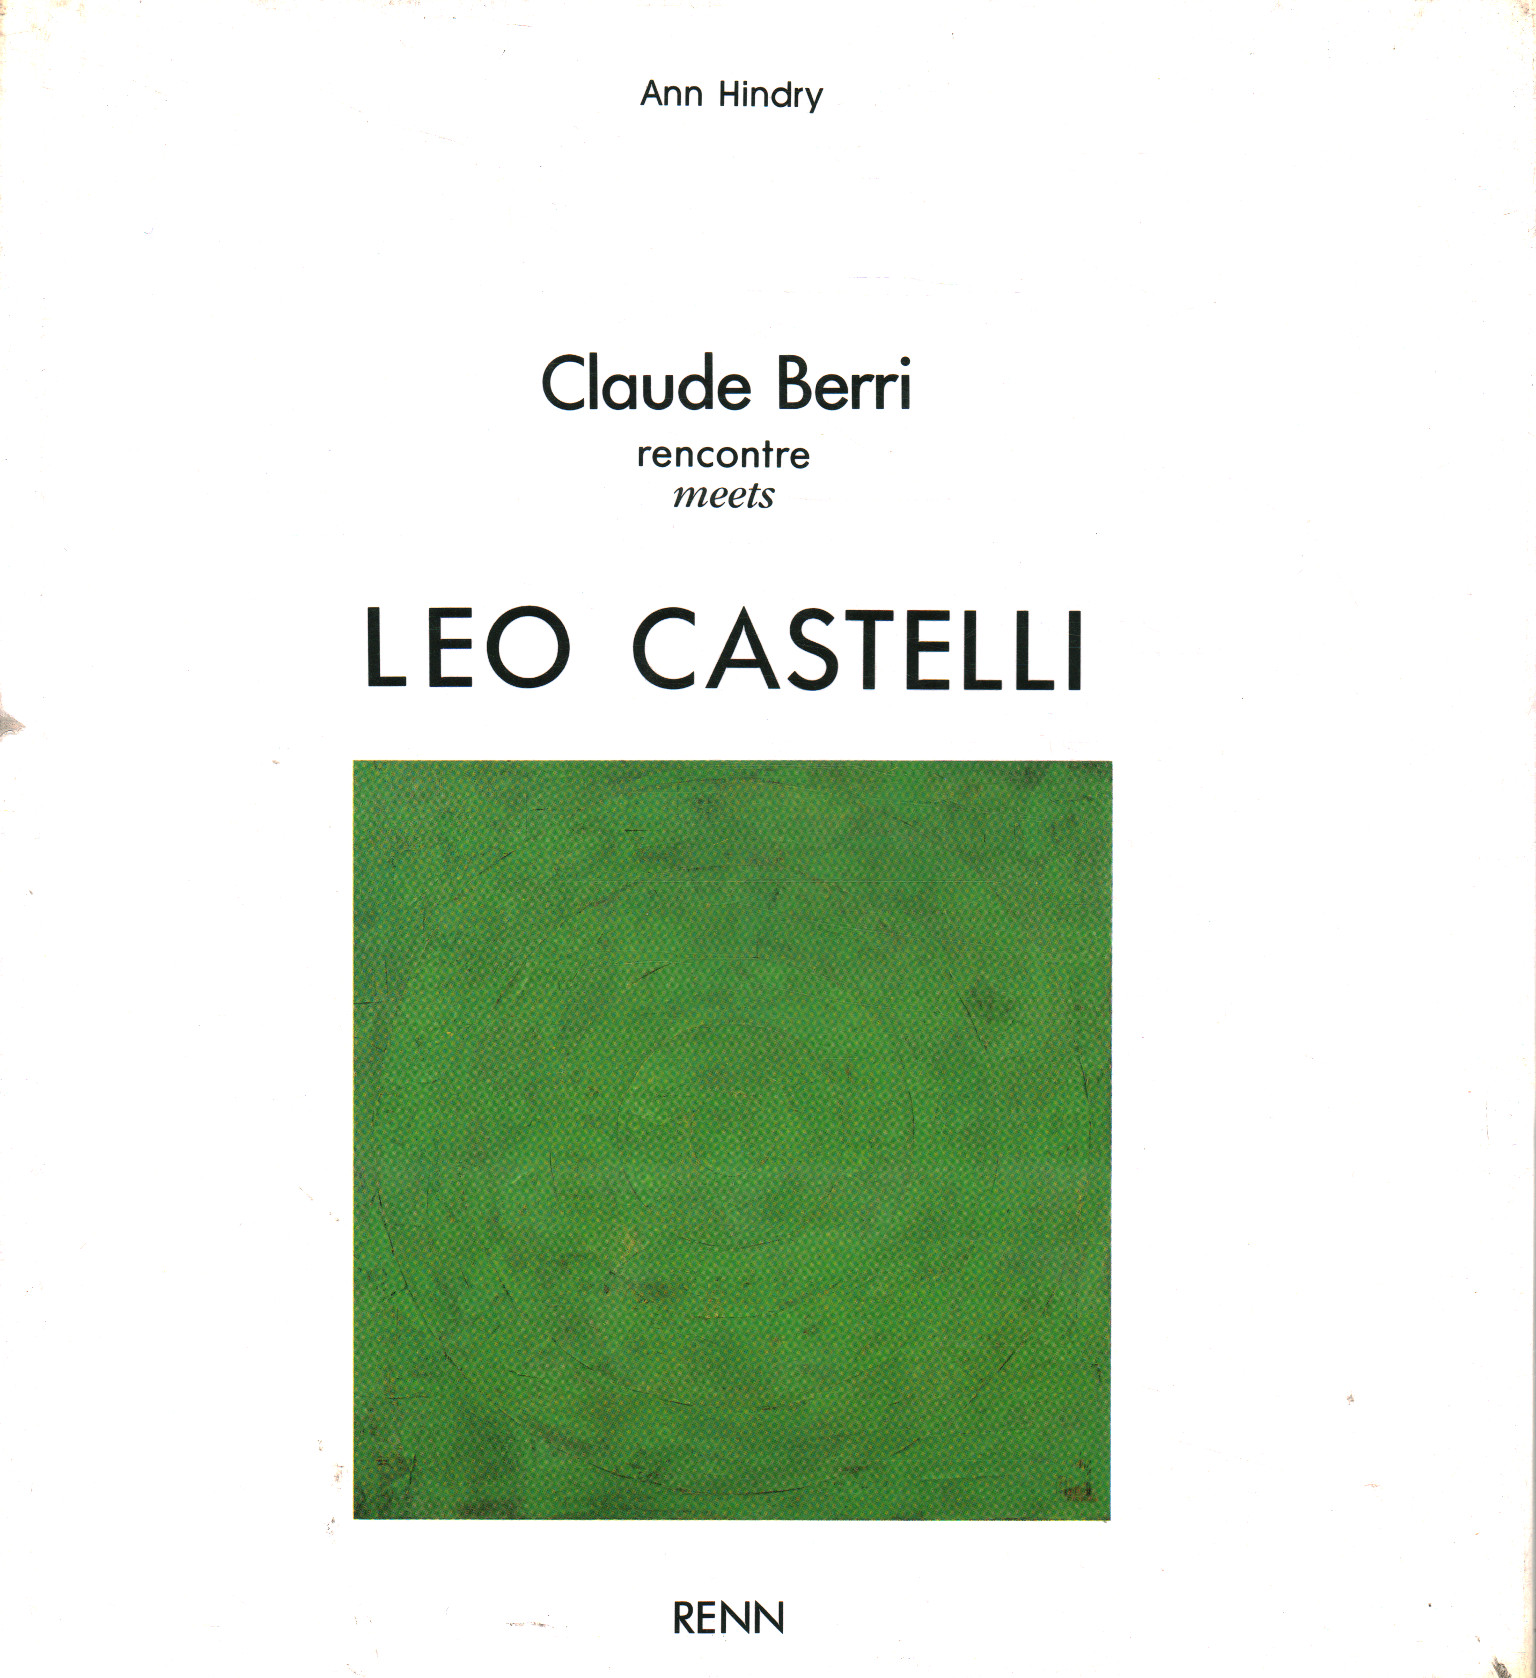 Claude Berri rencontre meets Leo Castell